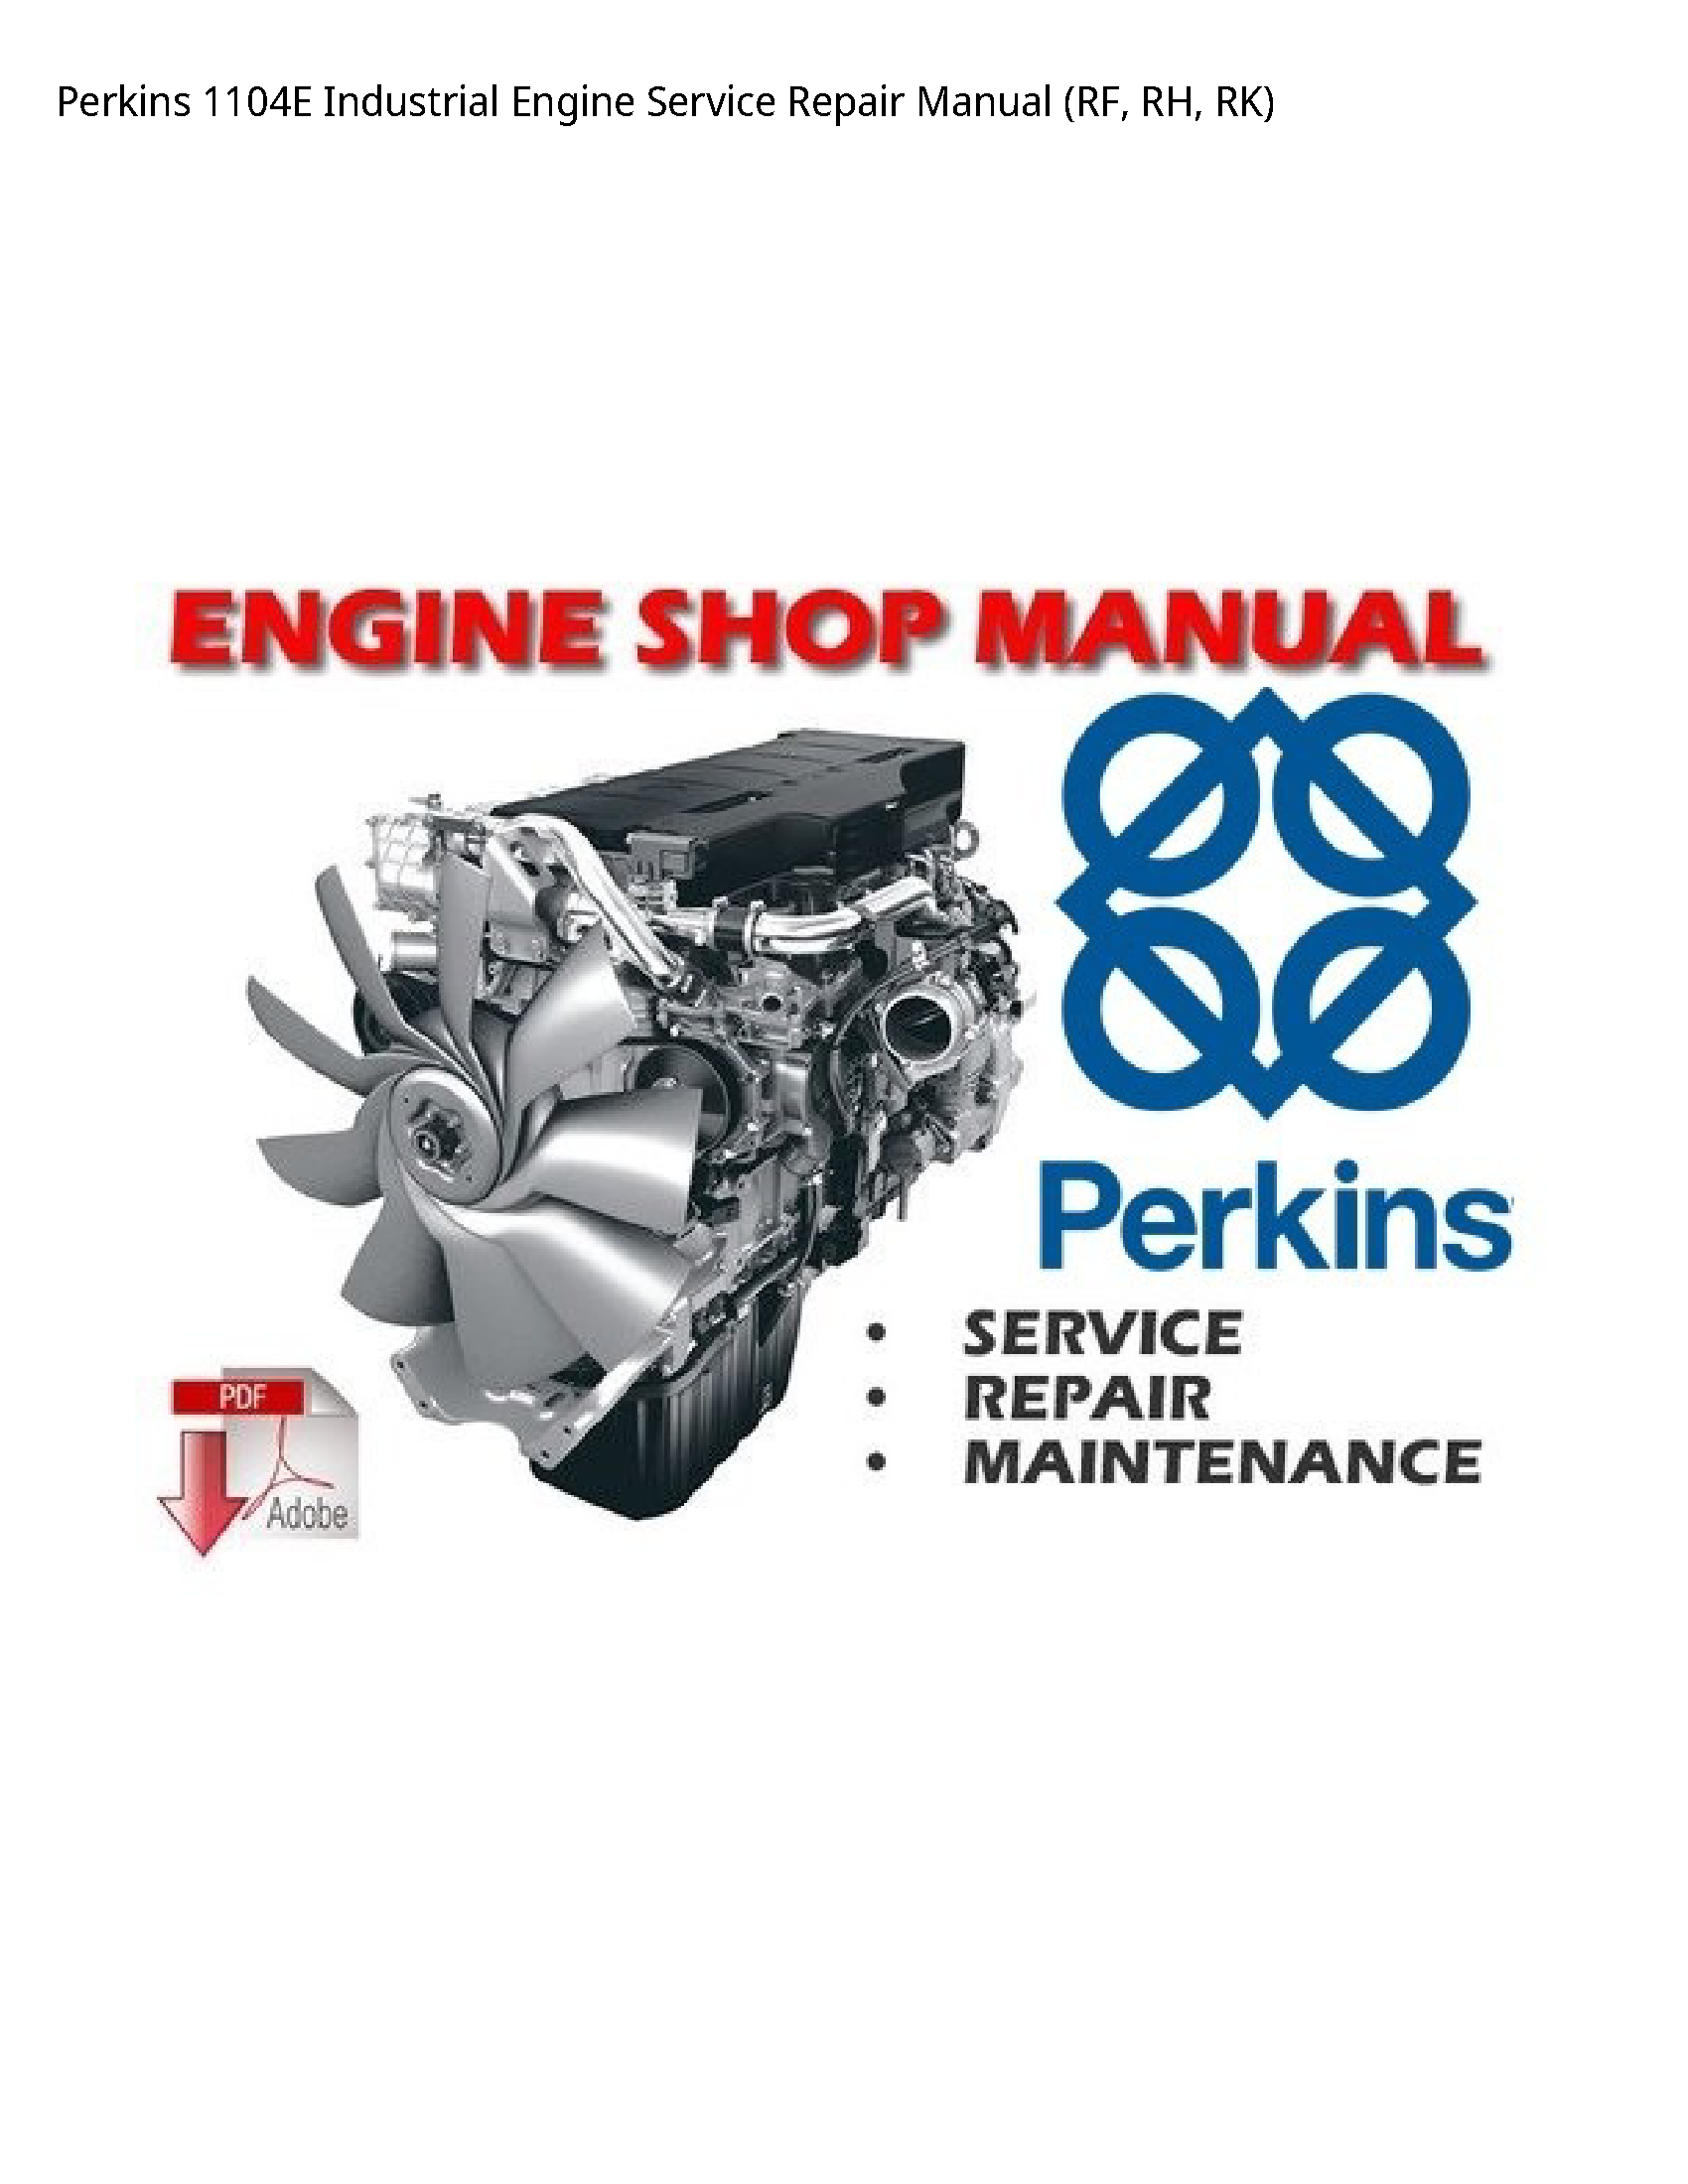 Perkins 1104E Industrial Engine manual